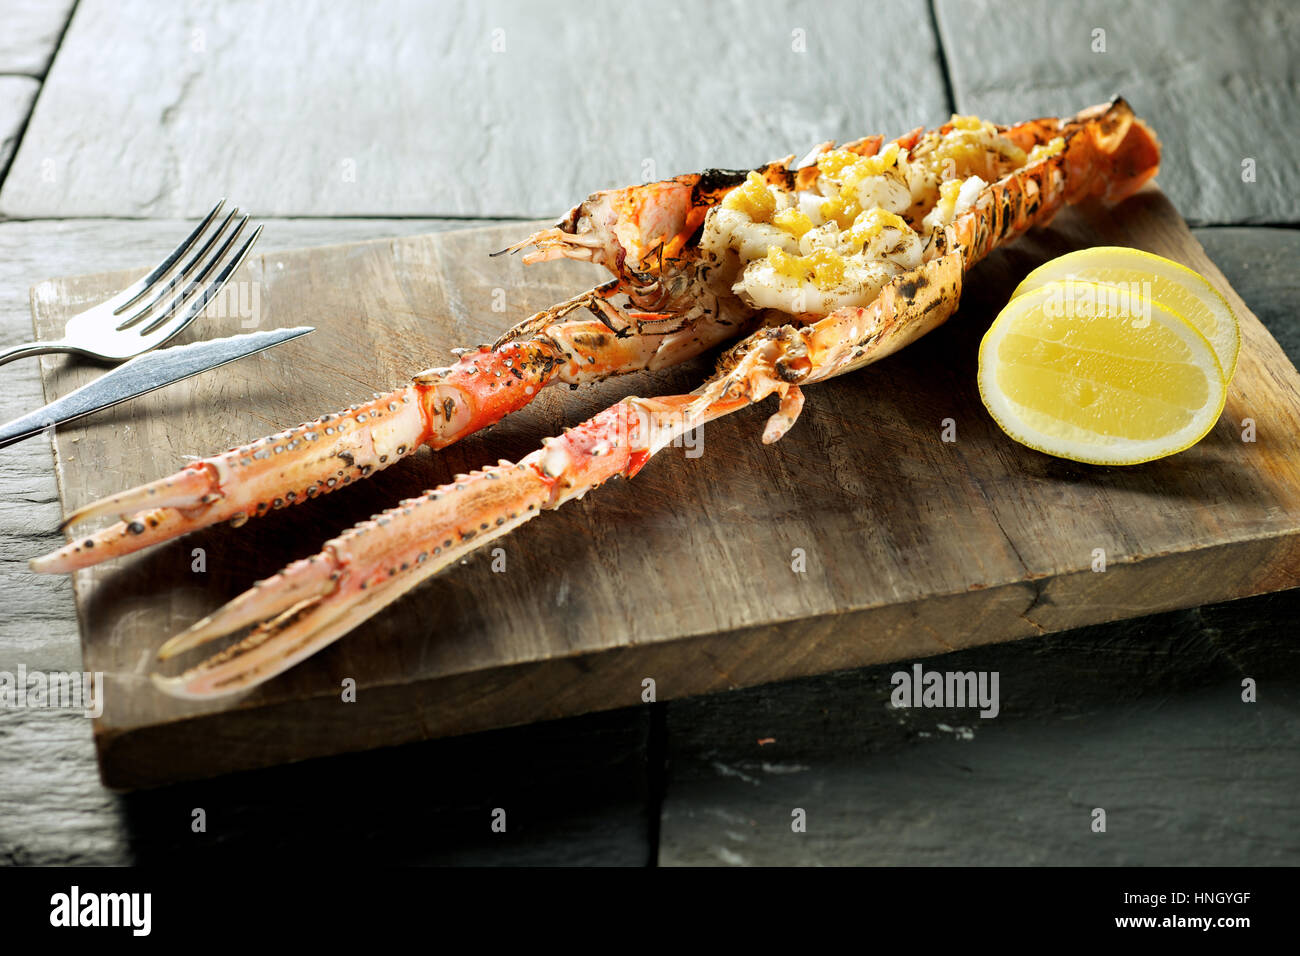 Lobster prawn dish also know as Irish langoustine (Nephrops norvegicus), Norway lobster, scampi or Dublin Bay prawn. Stock Photo